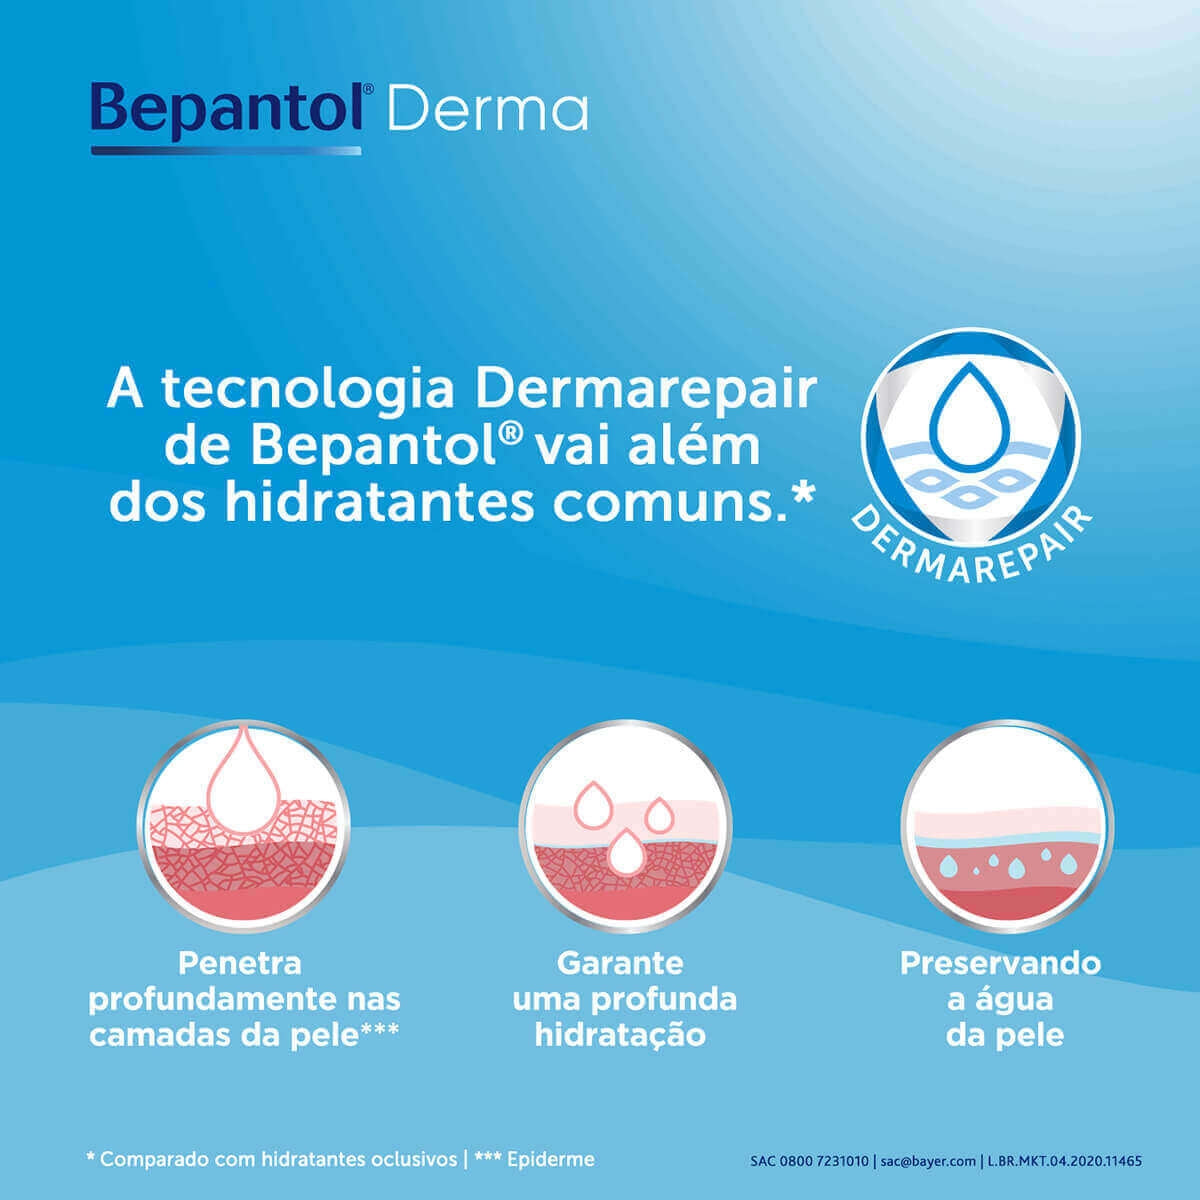 Bepantol Derma Moisturizing Intense Dry Touch Cream - 30g